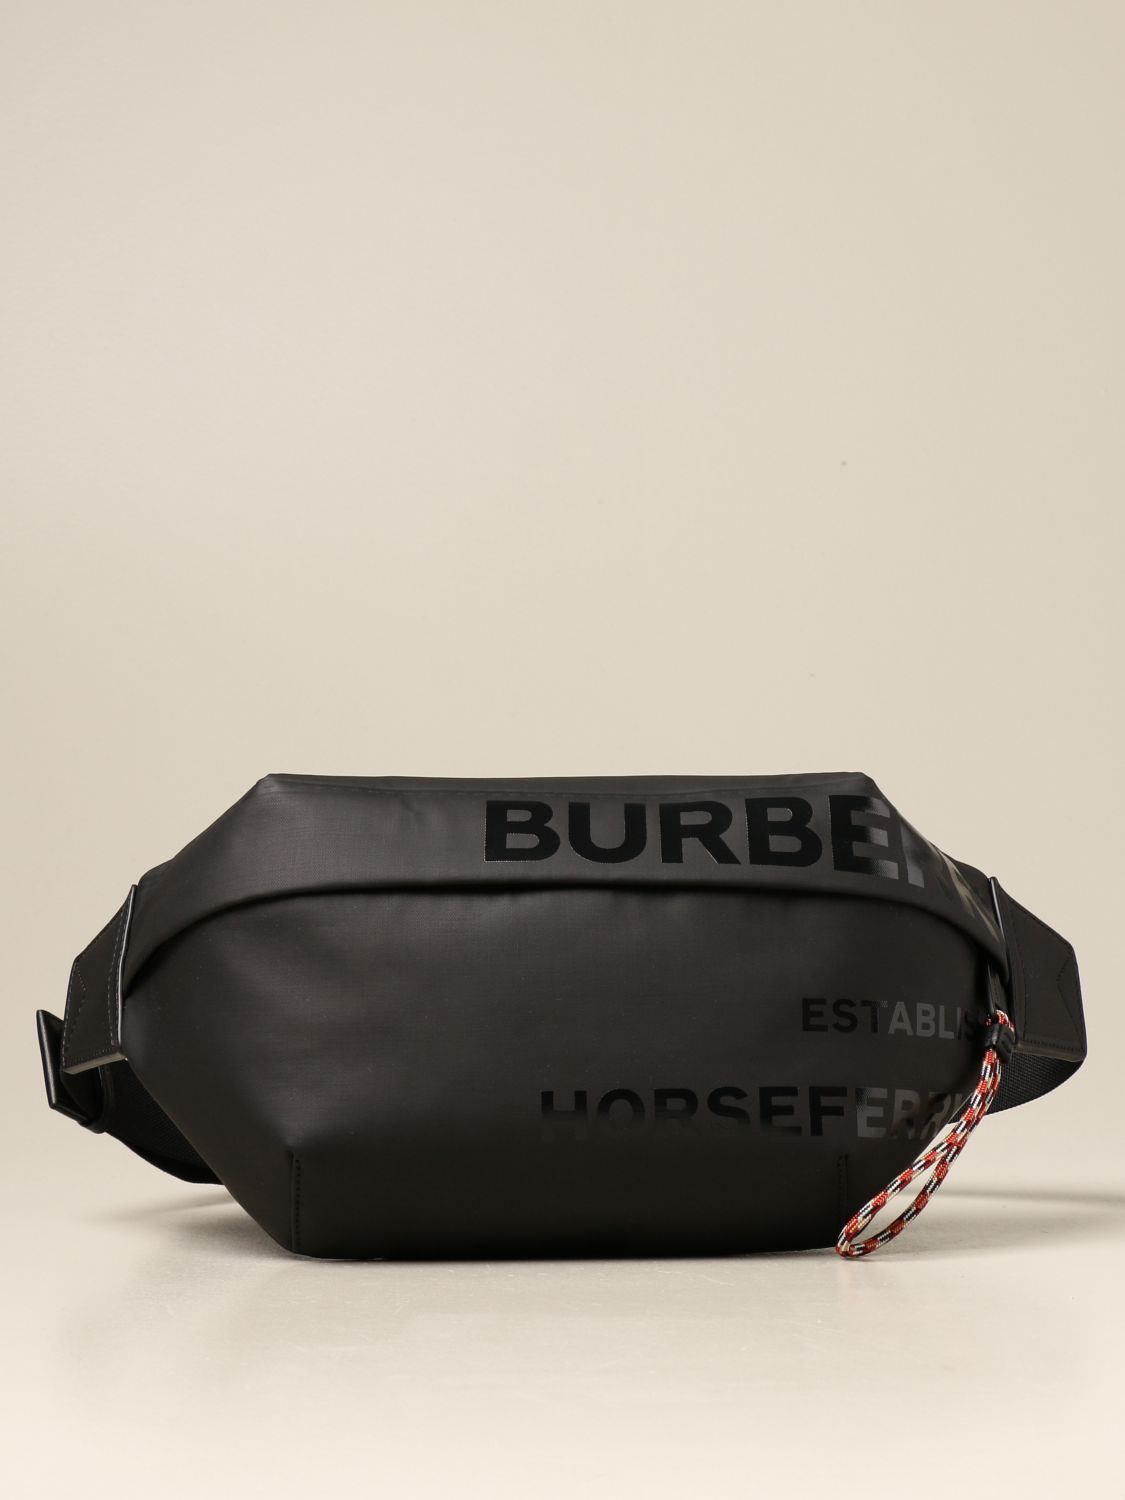 Actualizar 79+ imagen burberry logo belt bag - Abzlocal.mx